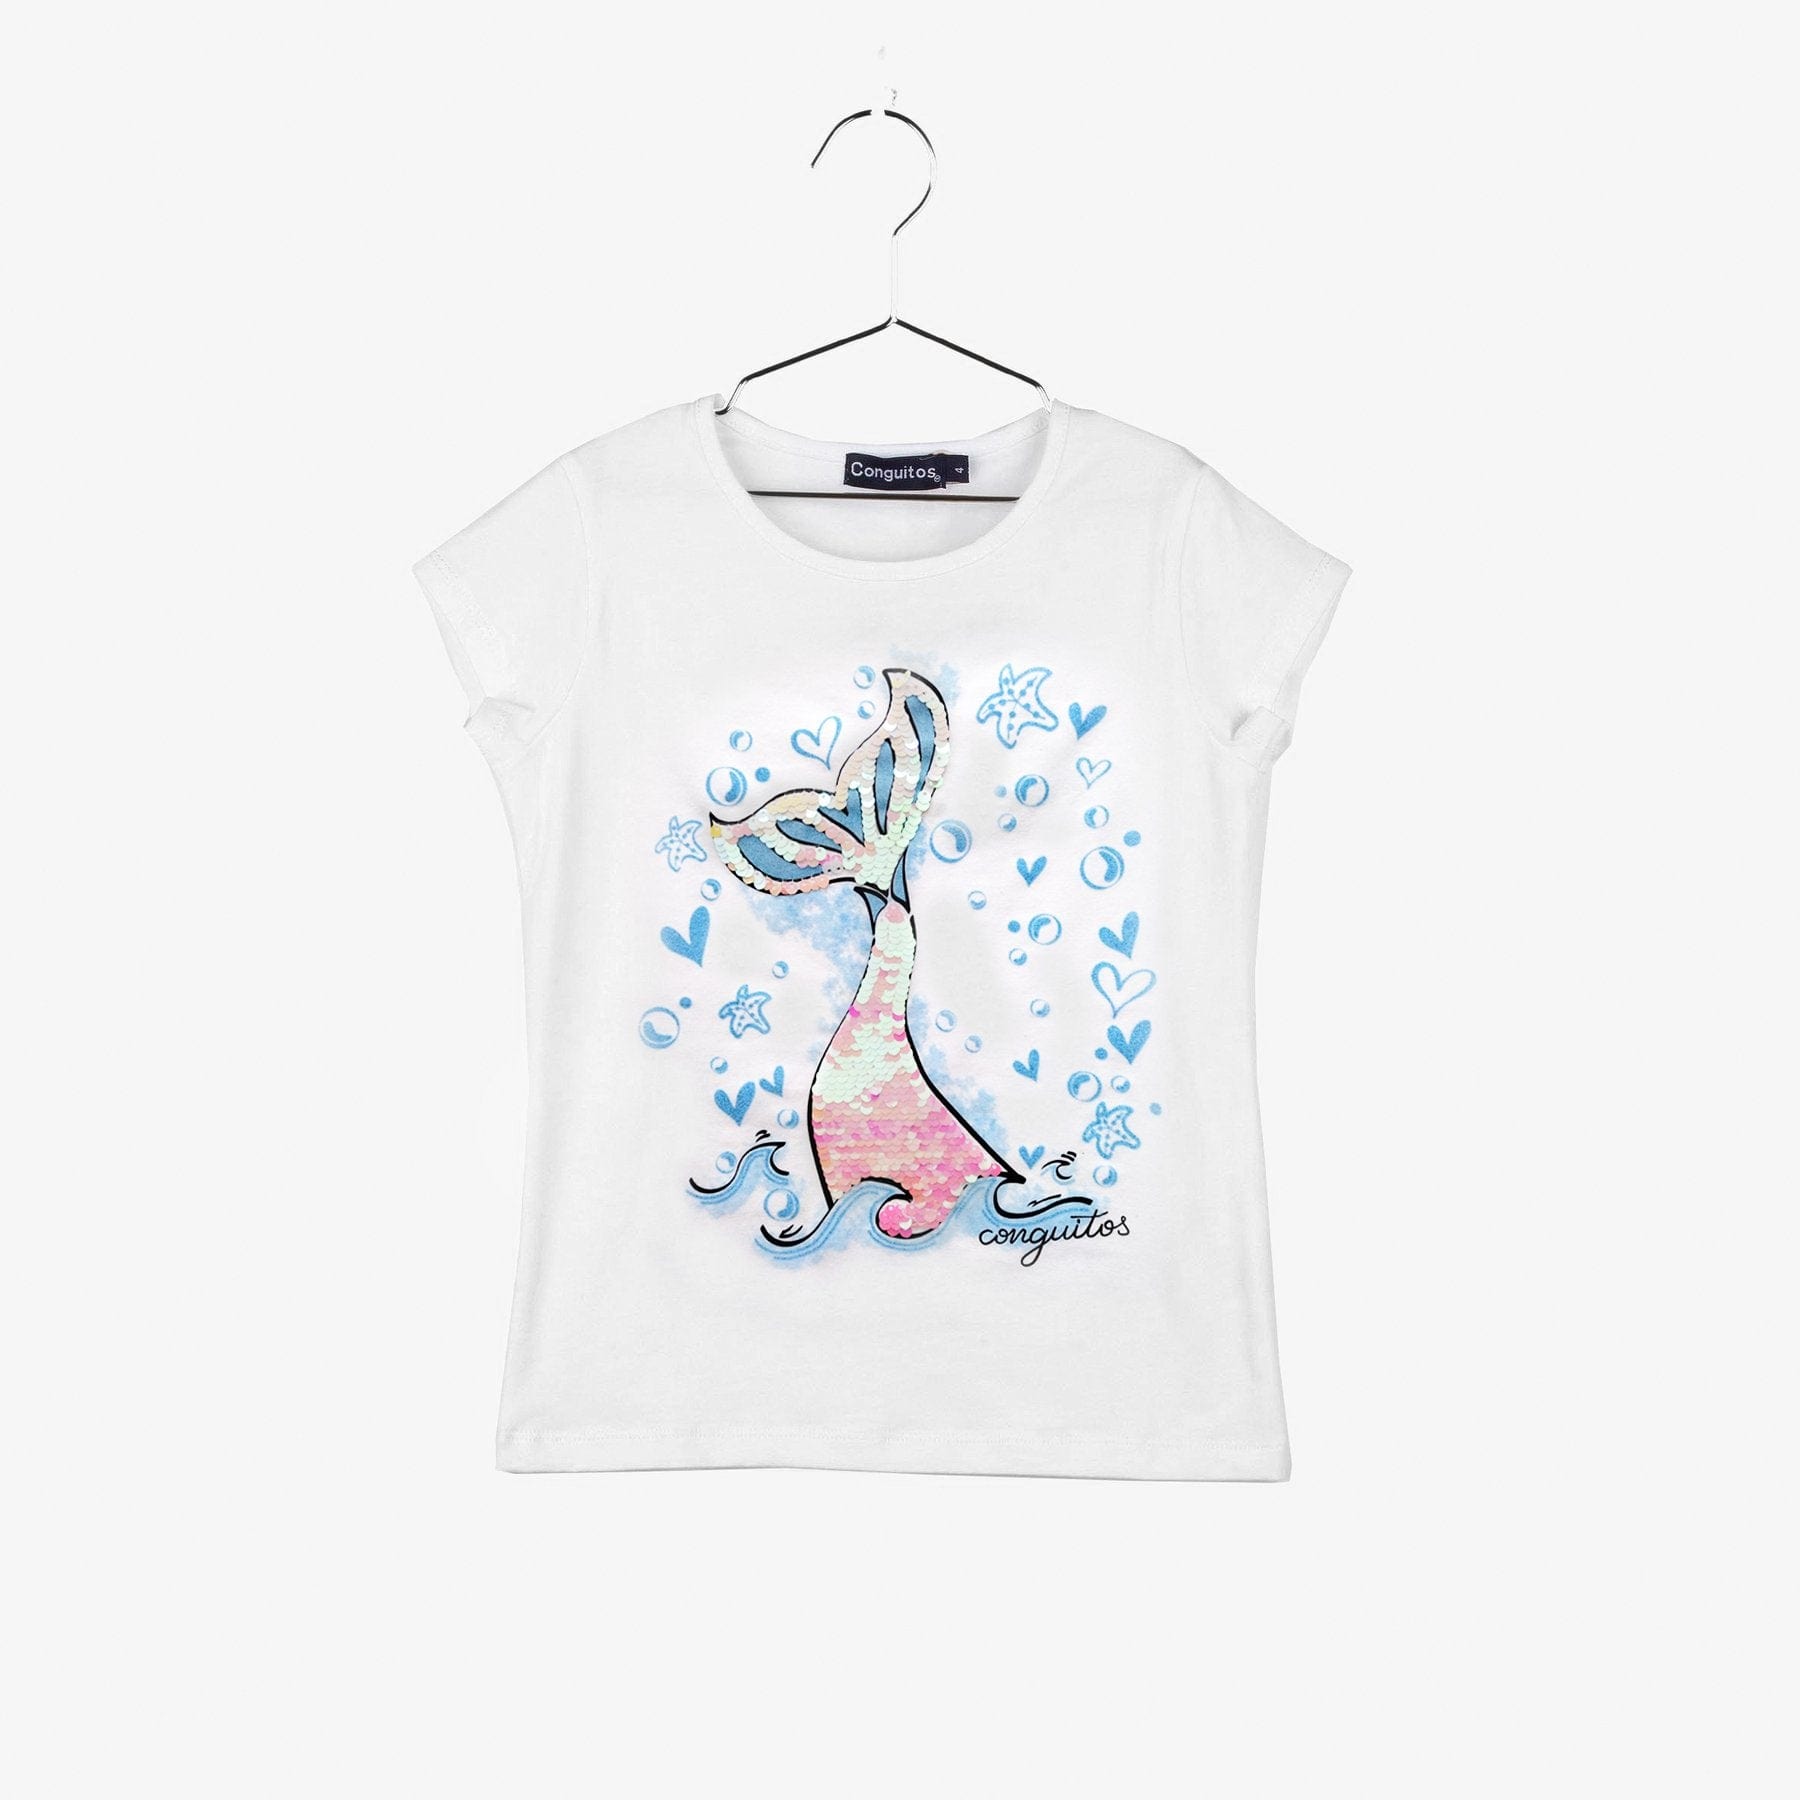 CONGUITOS TEXTIL Clothing Girl's "Mermaid" Reversible Sequins T-shirt